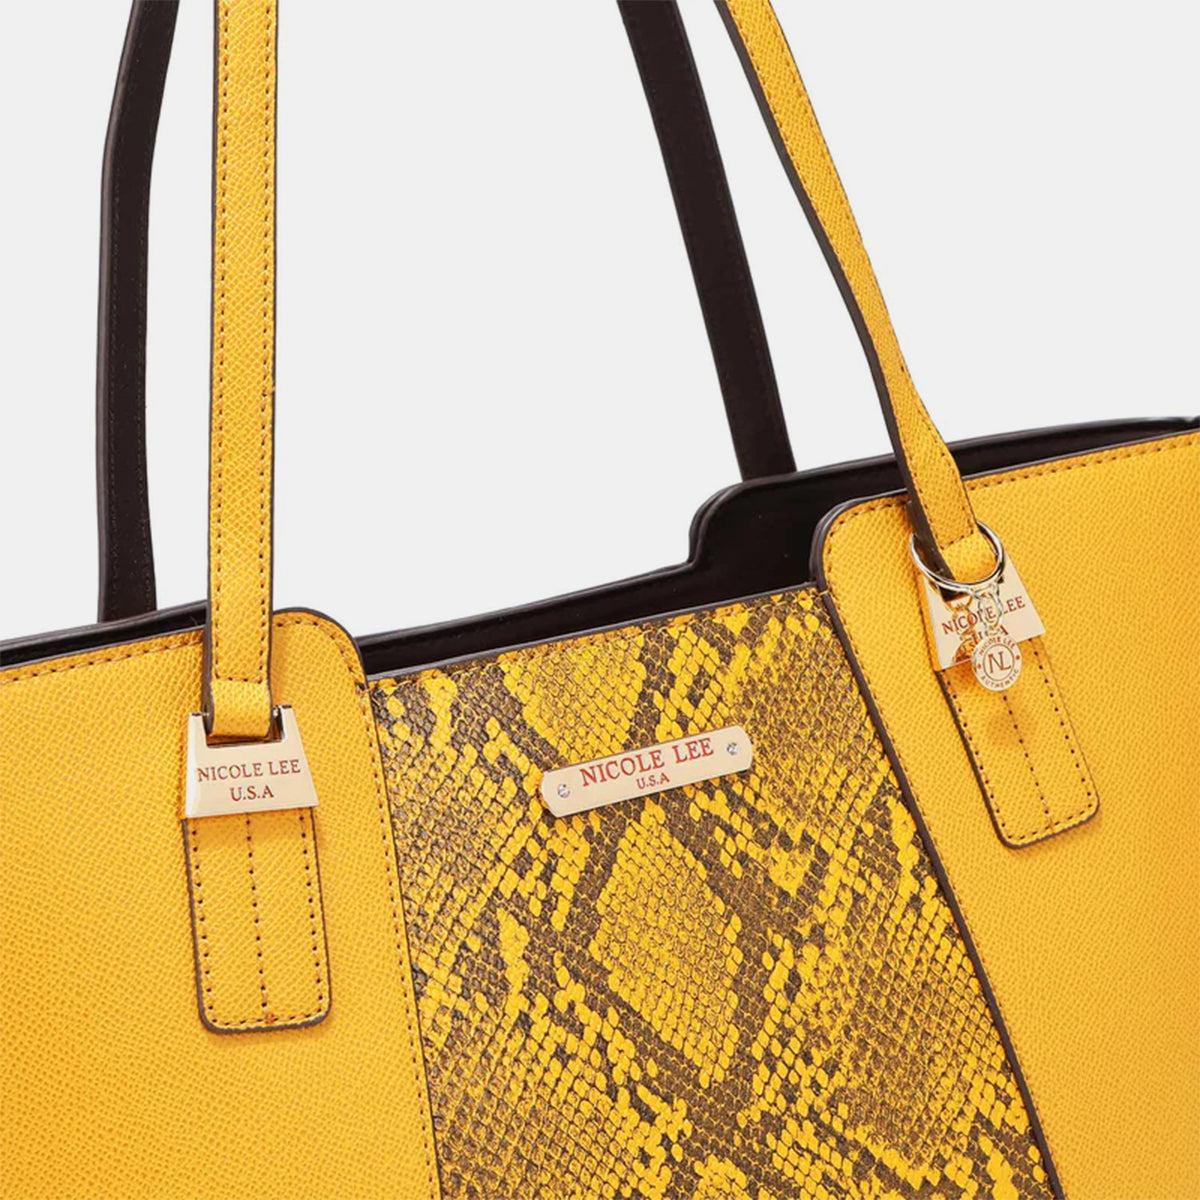 a yellow and black handbag with a name tag